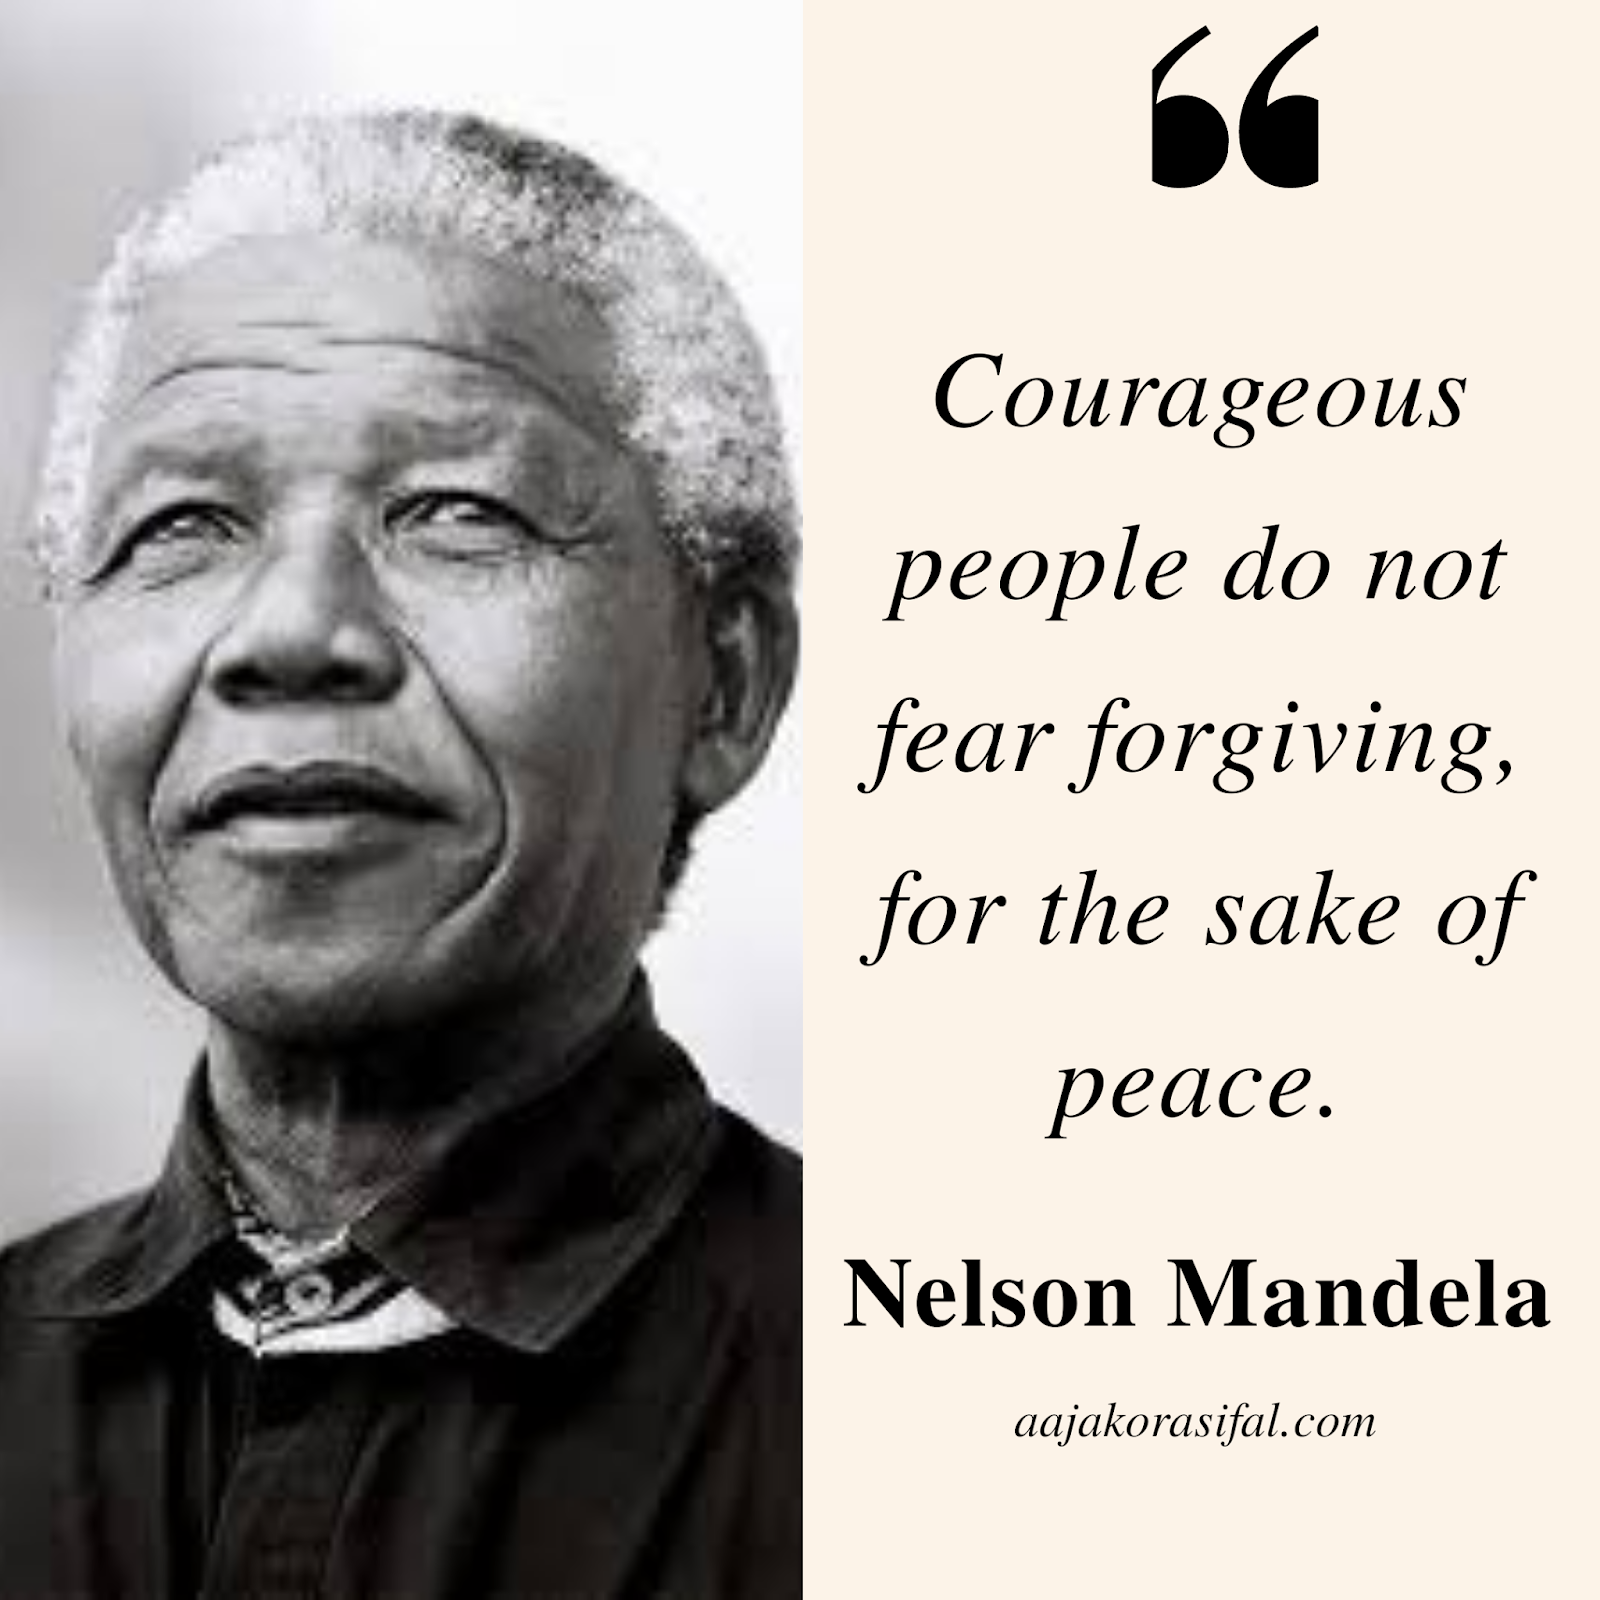 30 Most Inspirational Nelson Mandela quotes